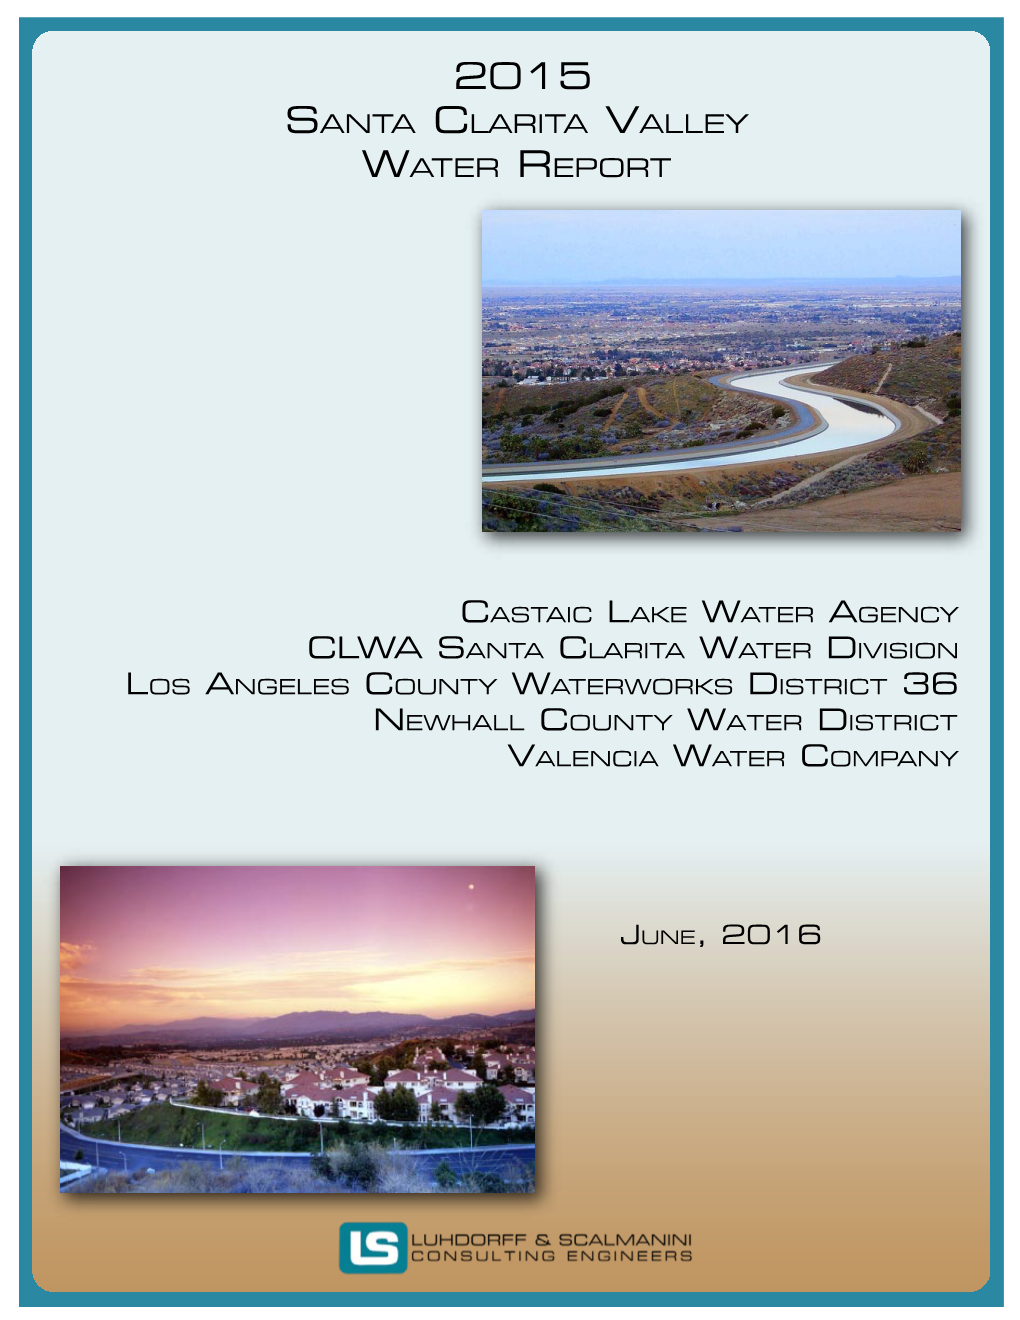 Santa Clarita Valley Water Report 2015